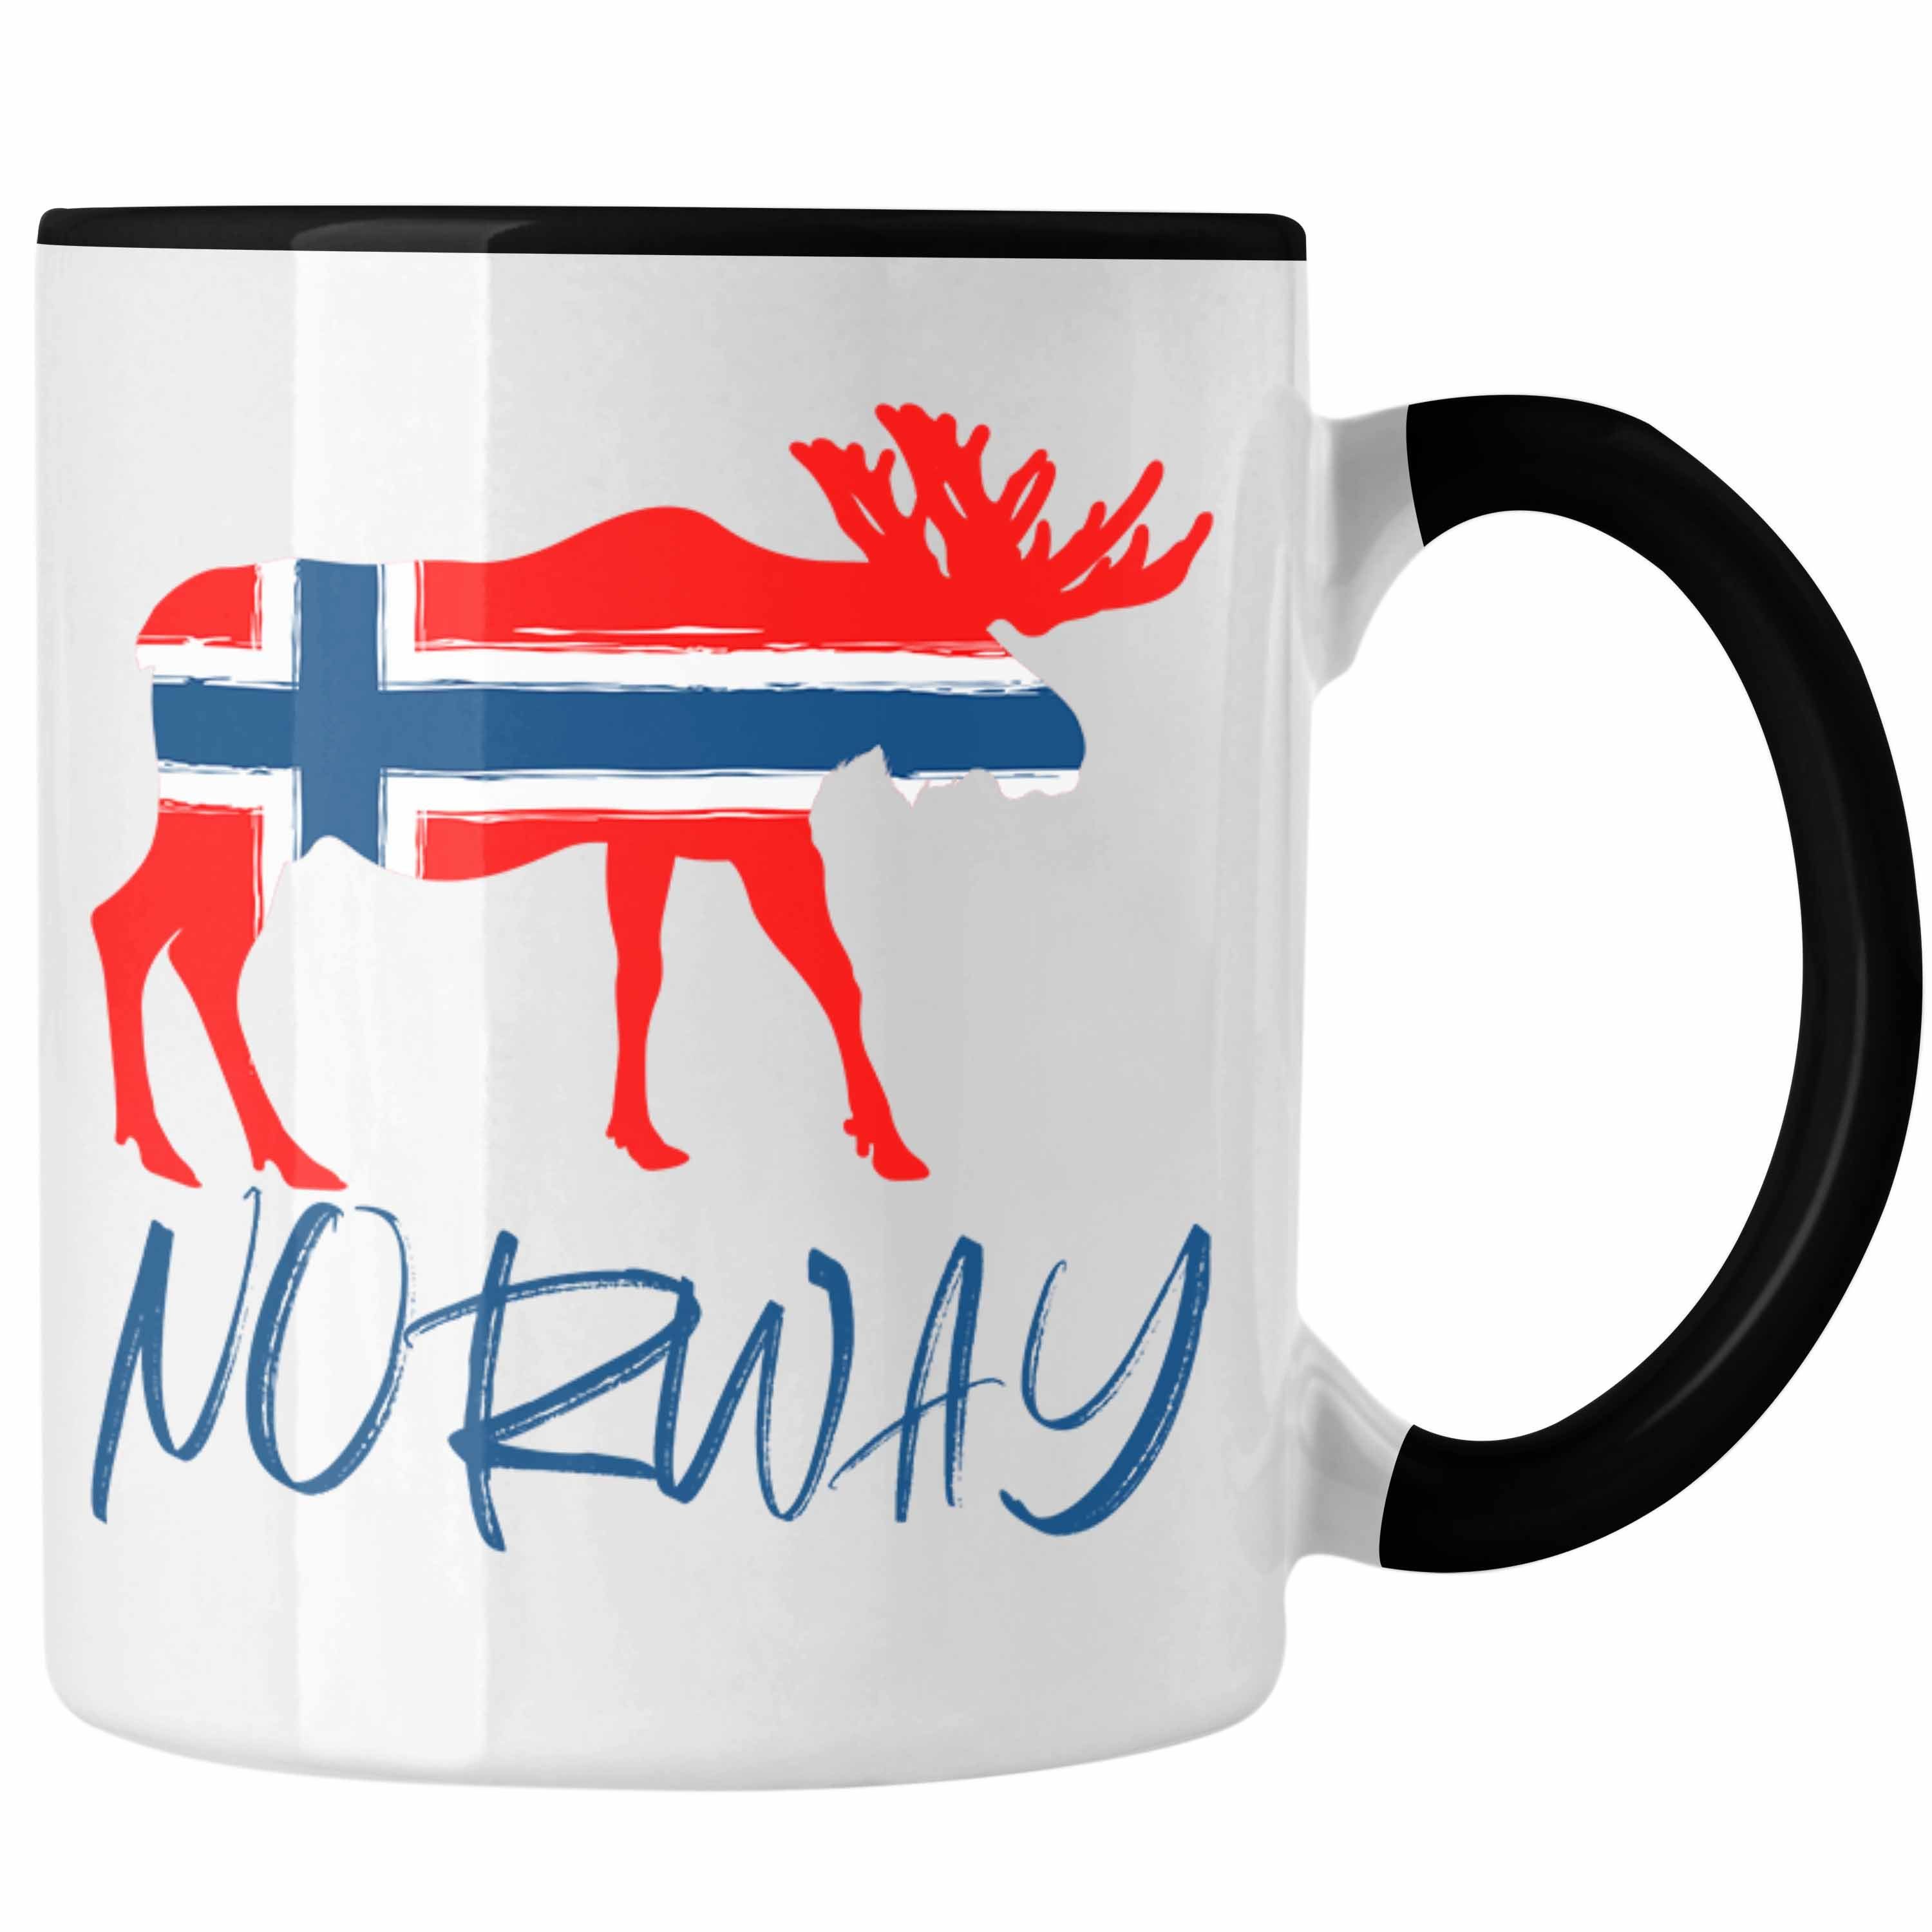 Norway Grafik - Trendation Trendation Elch Nordkap Geschenke Schwarz Flagge Tasse Tasse Norwegen